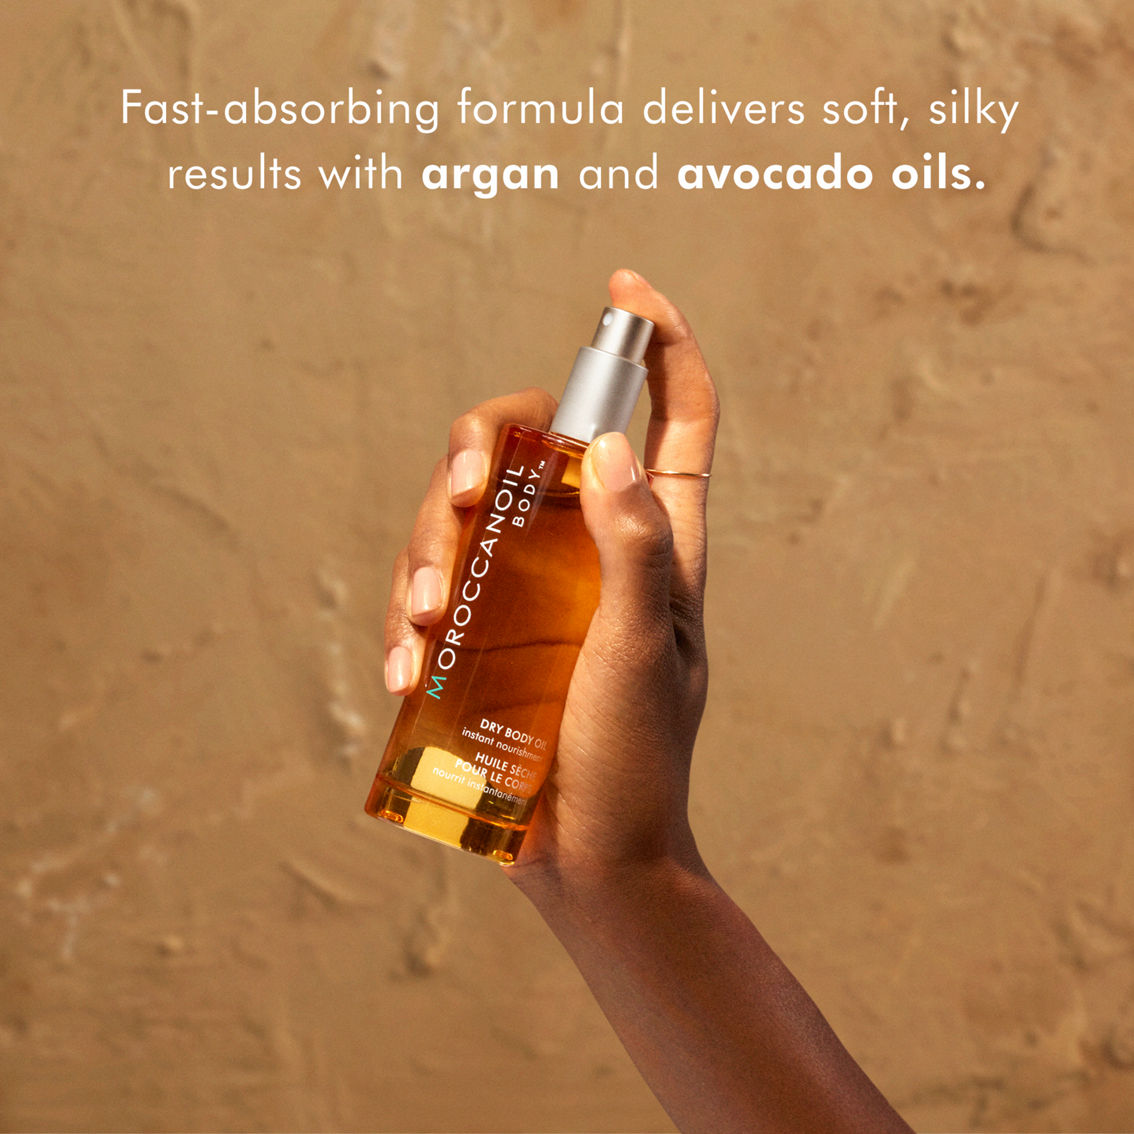 Moroccanoil Dry Body Oil 3.4 oz. - Image 2 of 4